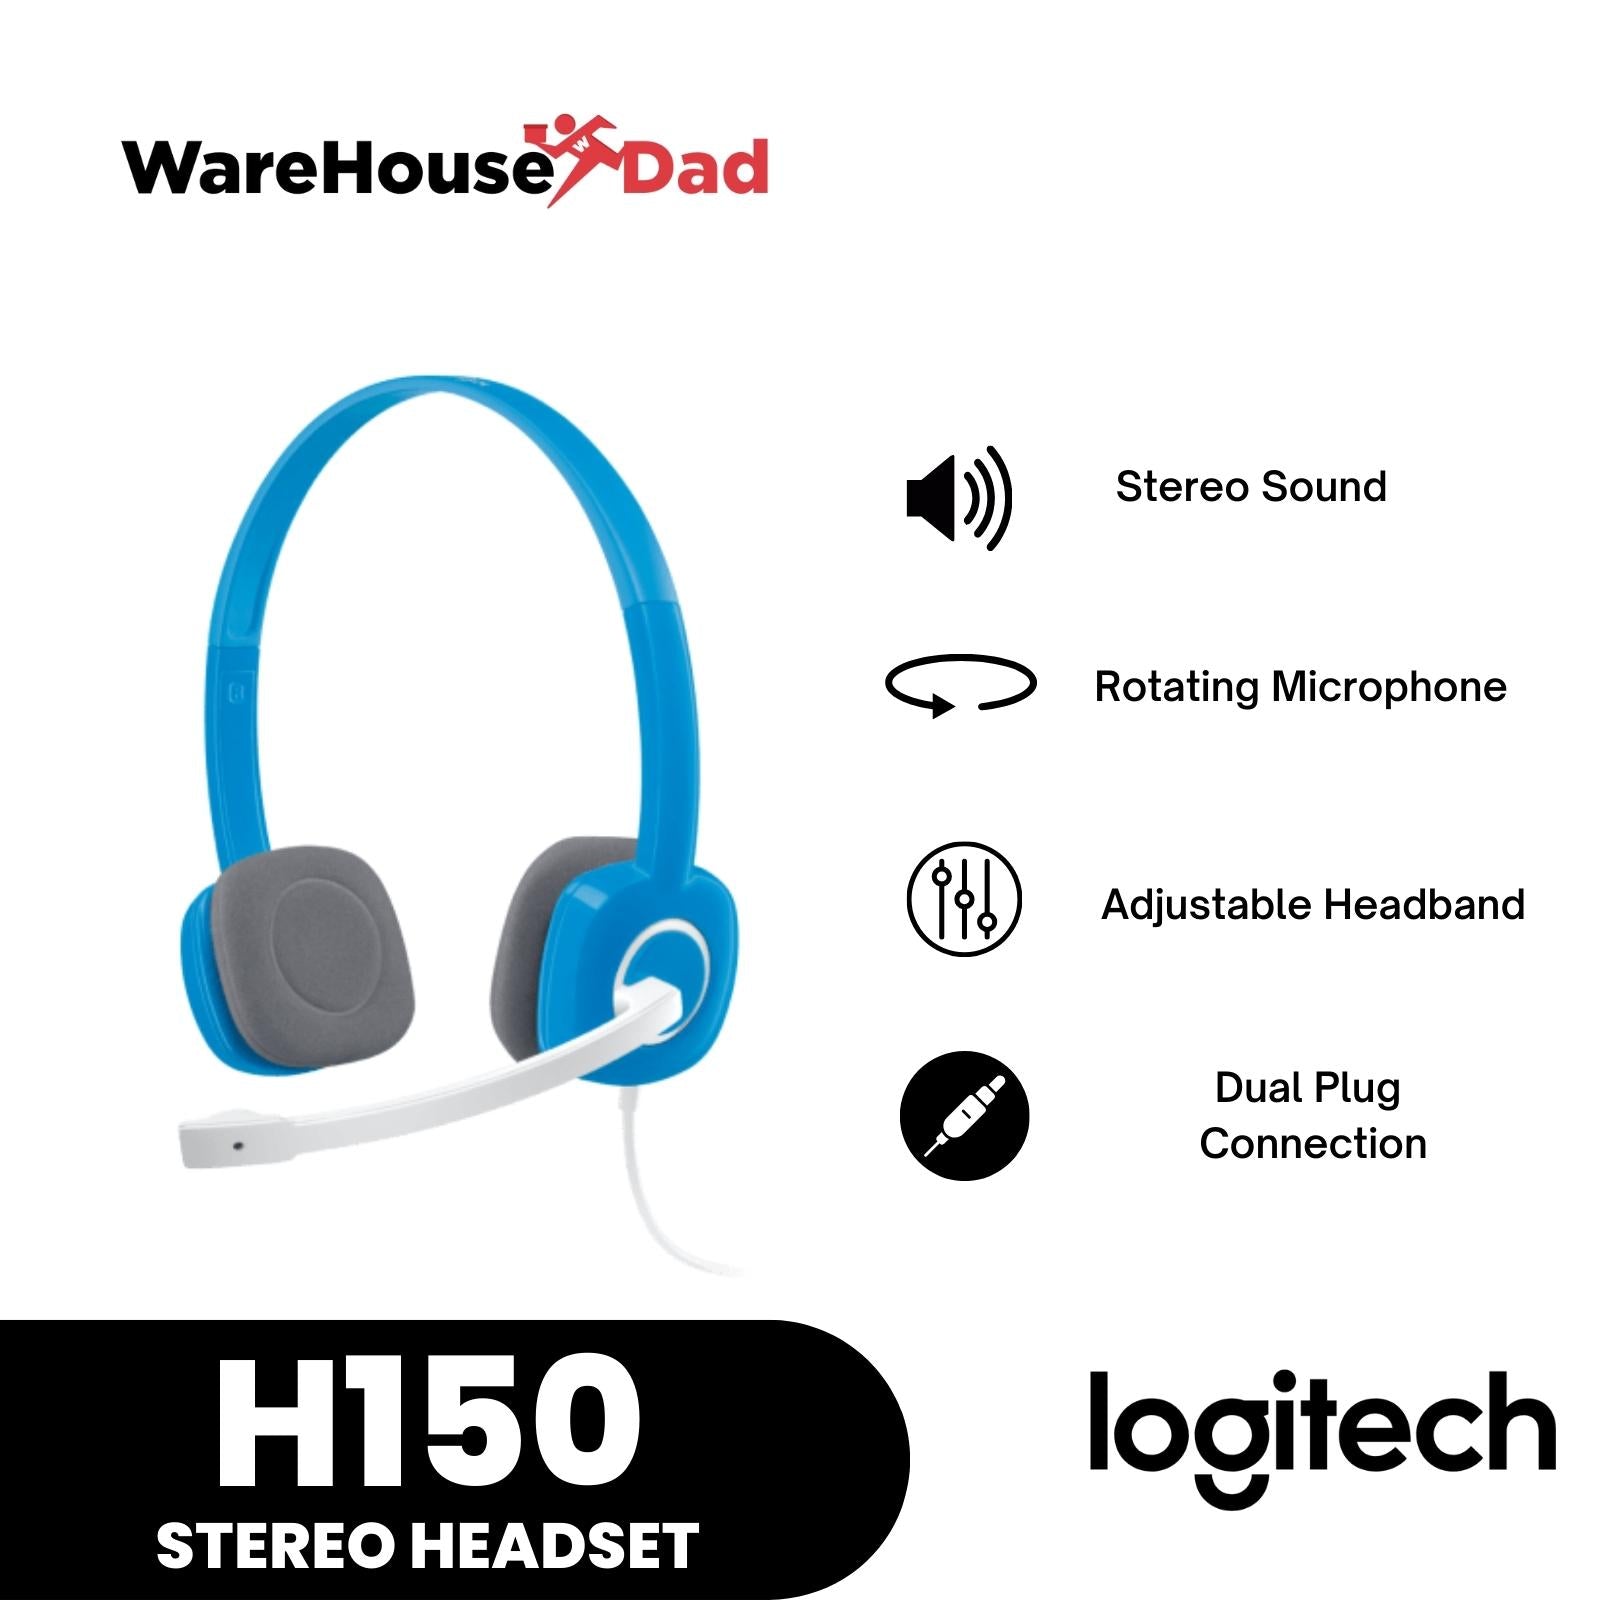 Stereo H150 – WarehouseDad Headset Logitech